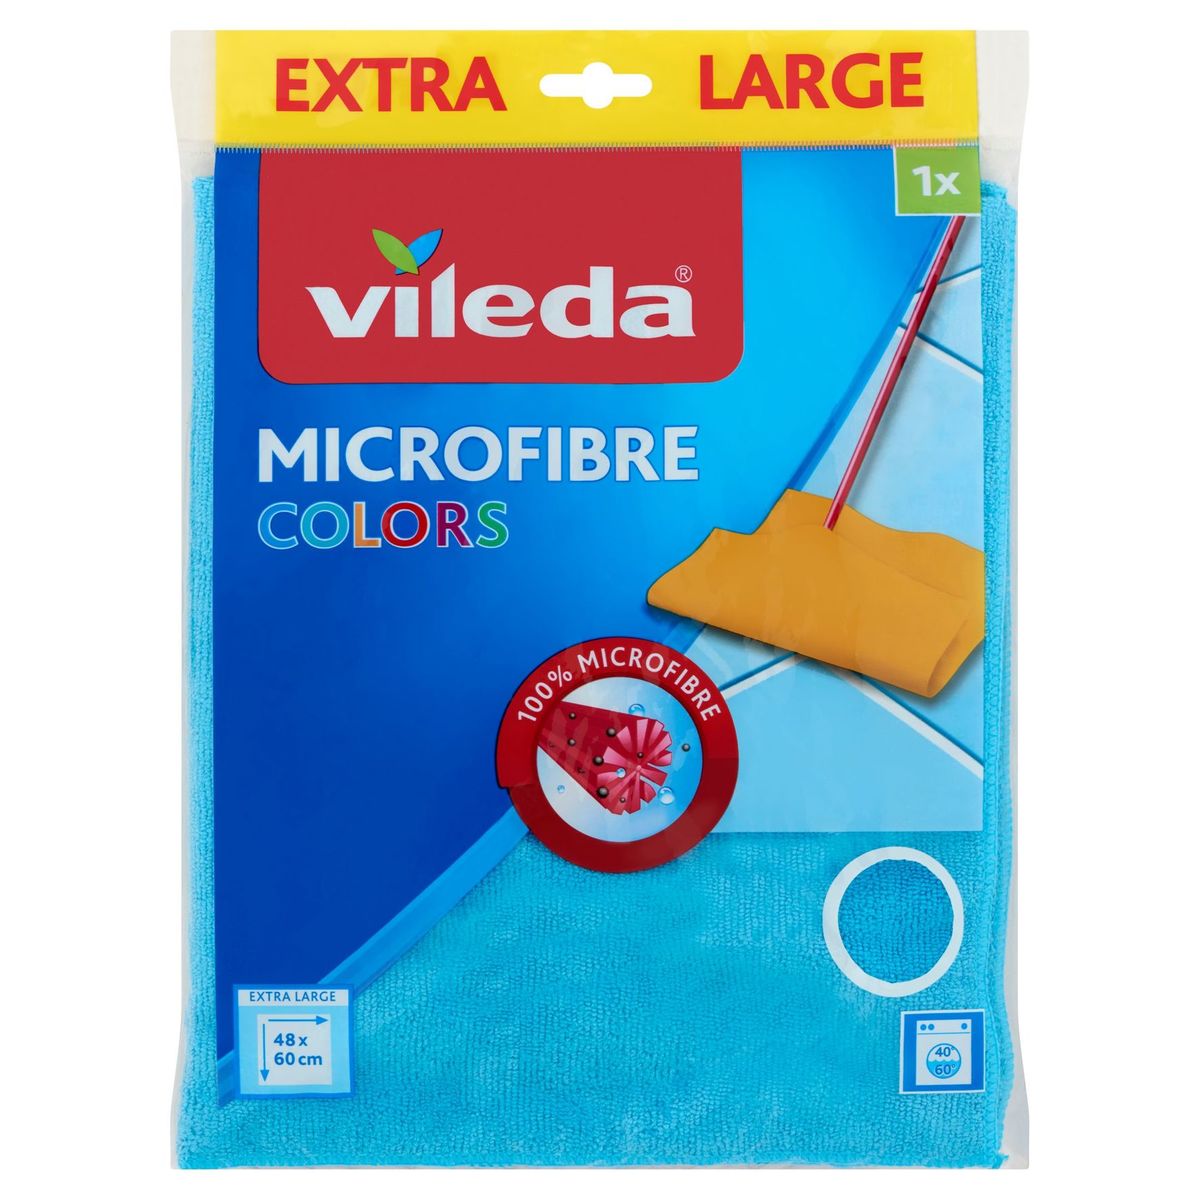 Vileda Microfibre Colors Extra Large